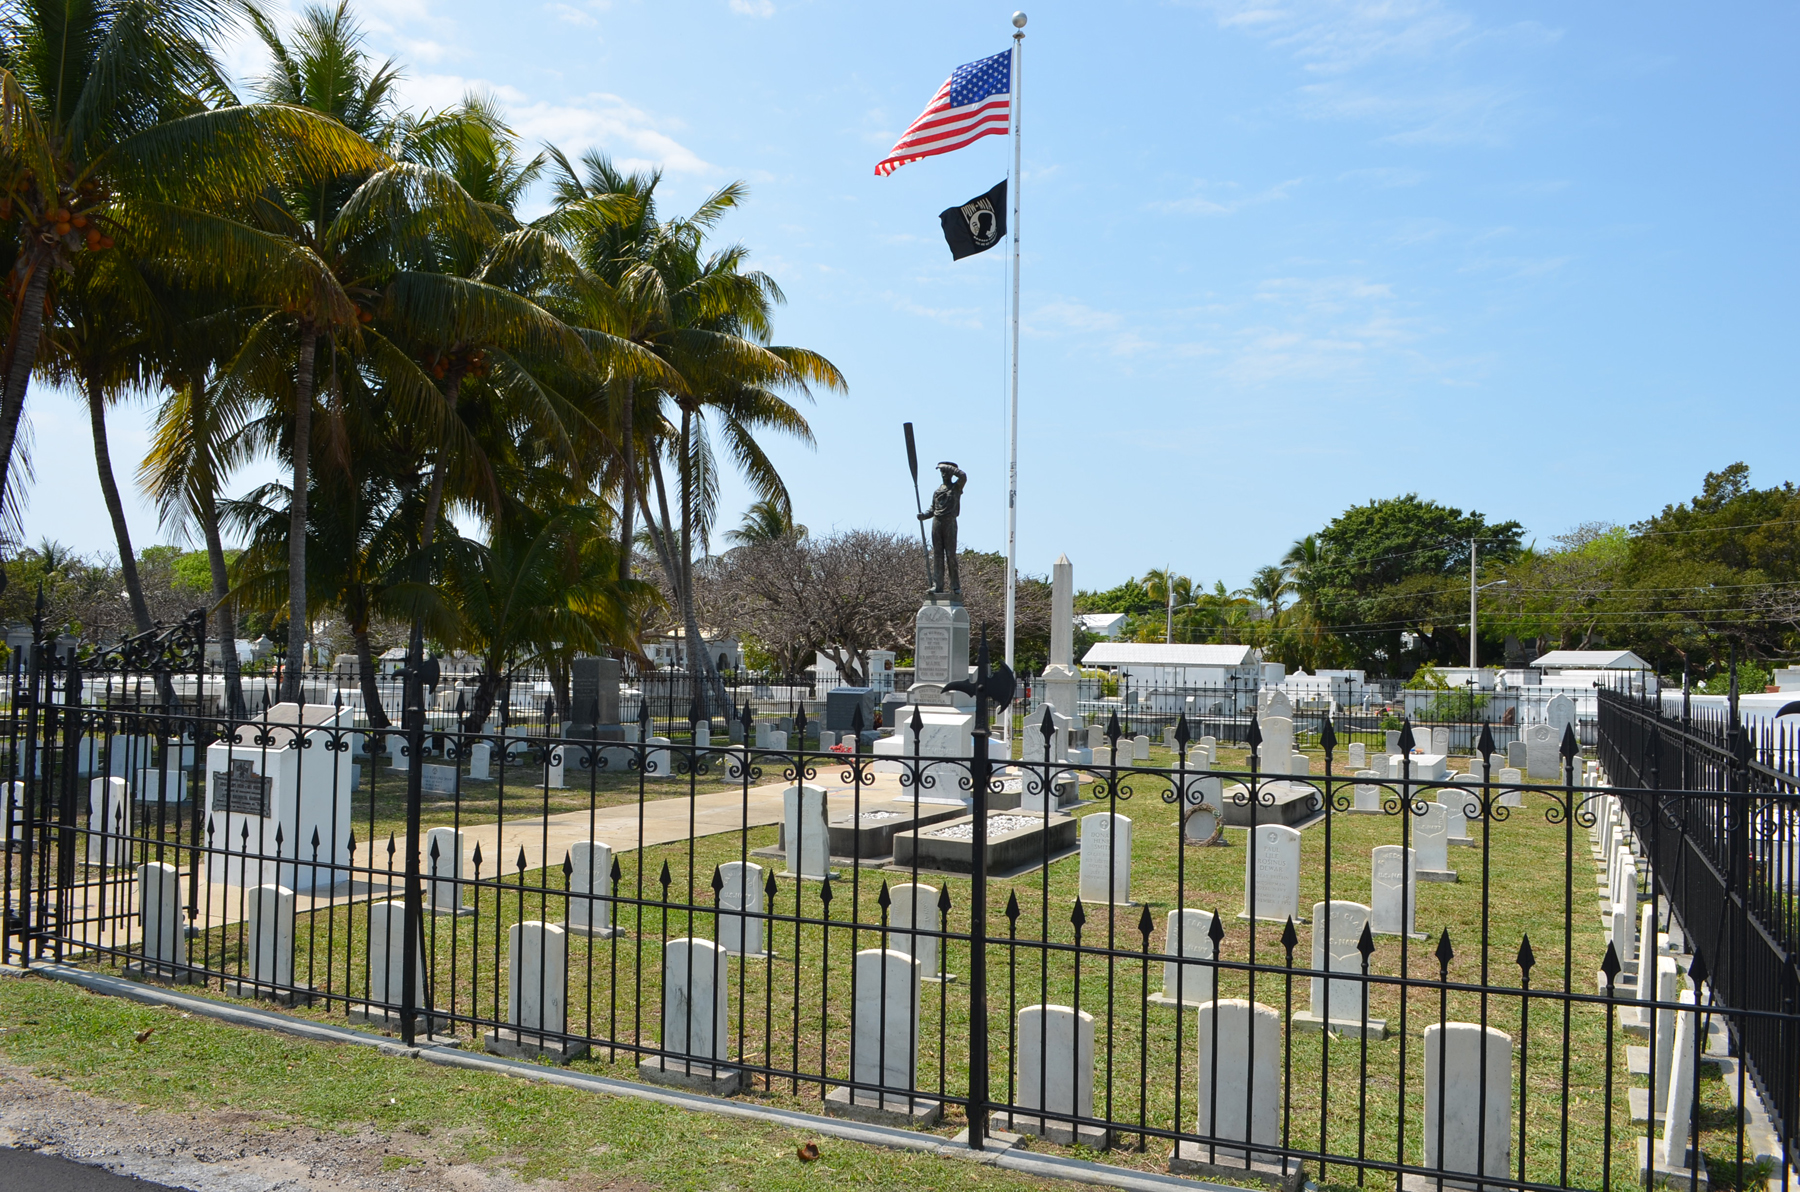 Cemetery Stroll, Black History Month